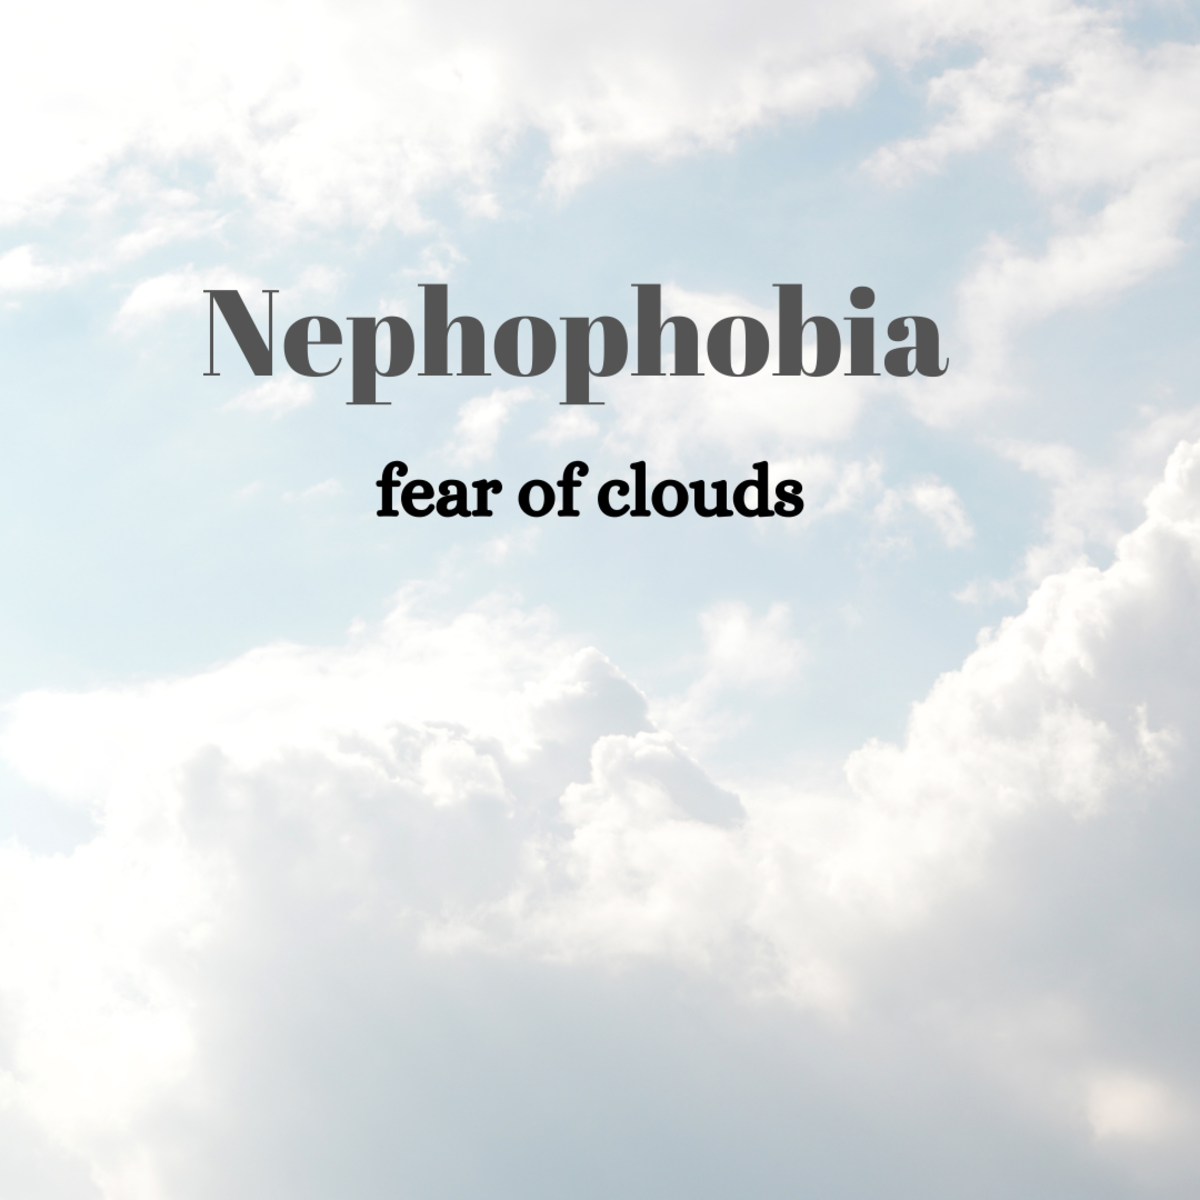 Nephophobia, a fear of clouds